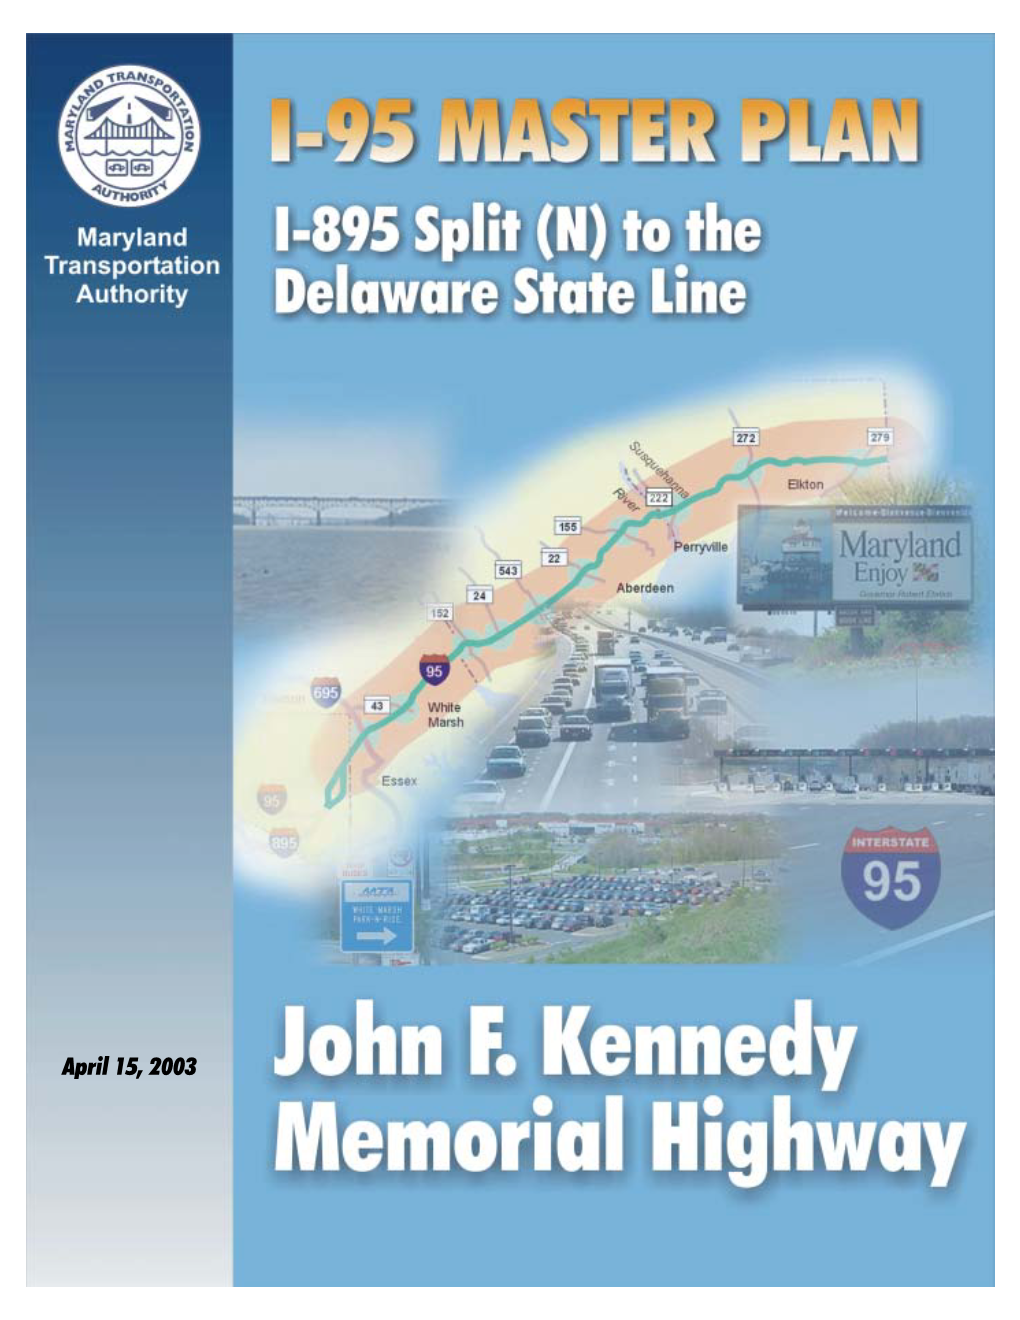 I-95 Master Plan - John F